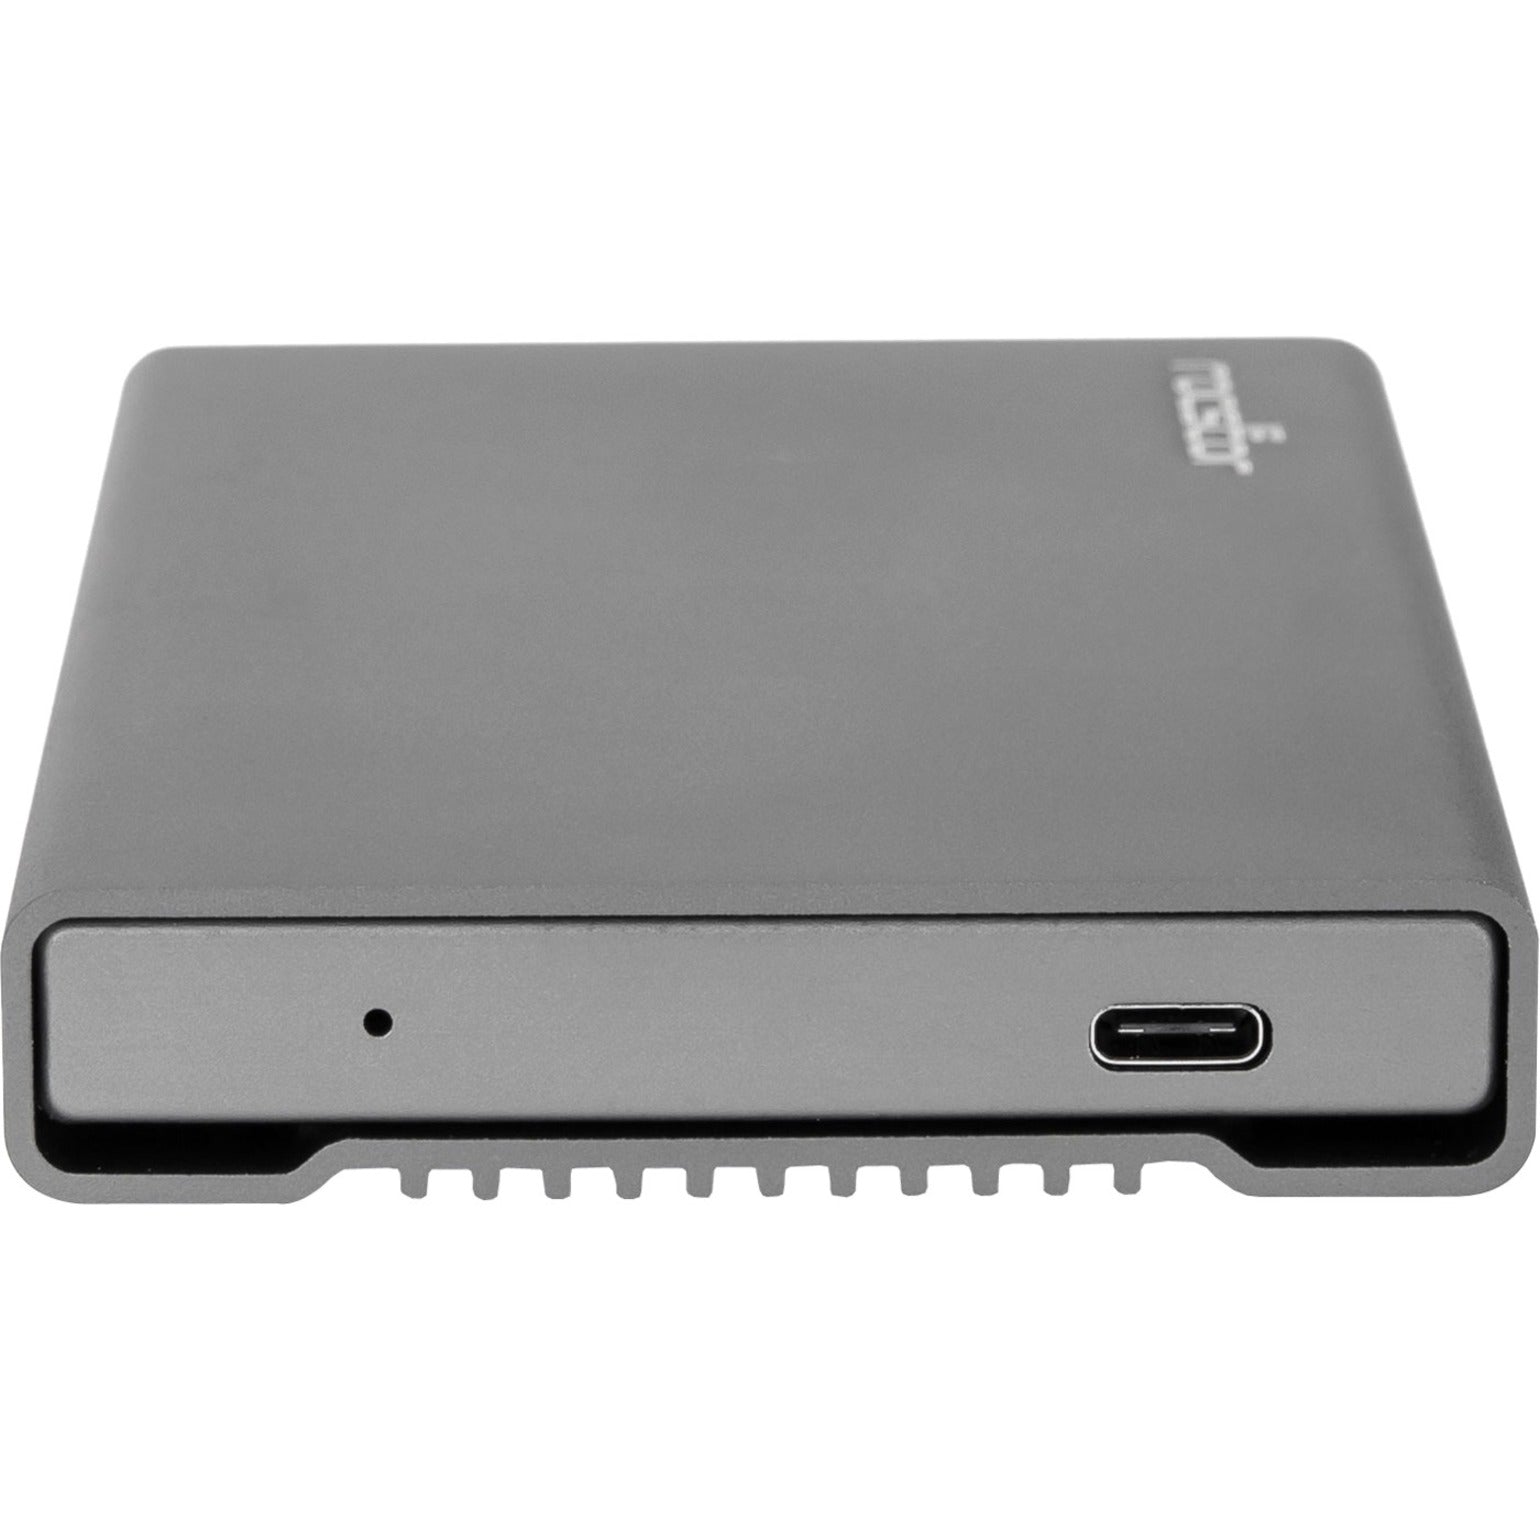 Rocstor GP3606-01 Rocpro P33 2TB Portable USB 3.1 Gen2 10Gbps USB 3.0 External Hard Drive, Aluminum Gray